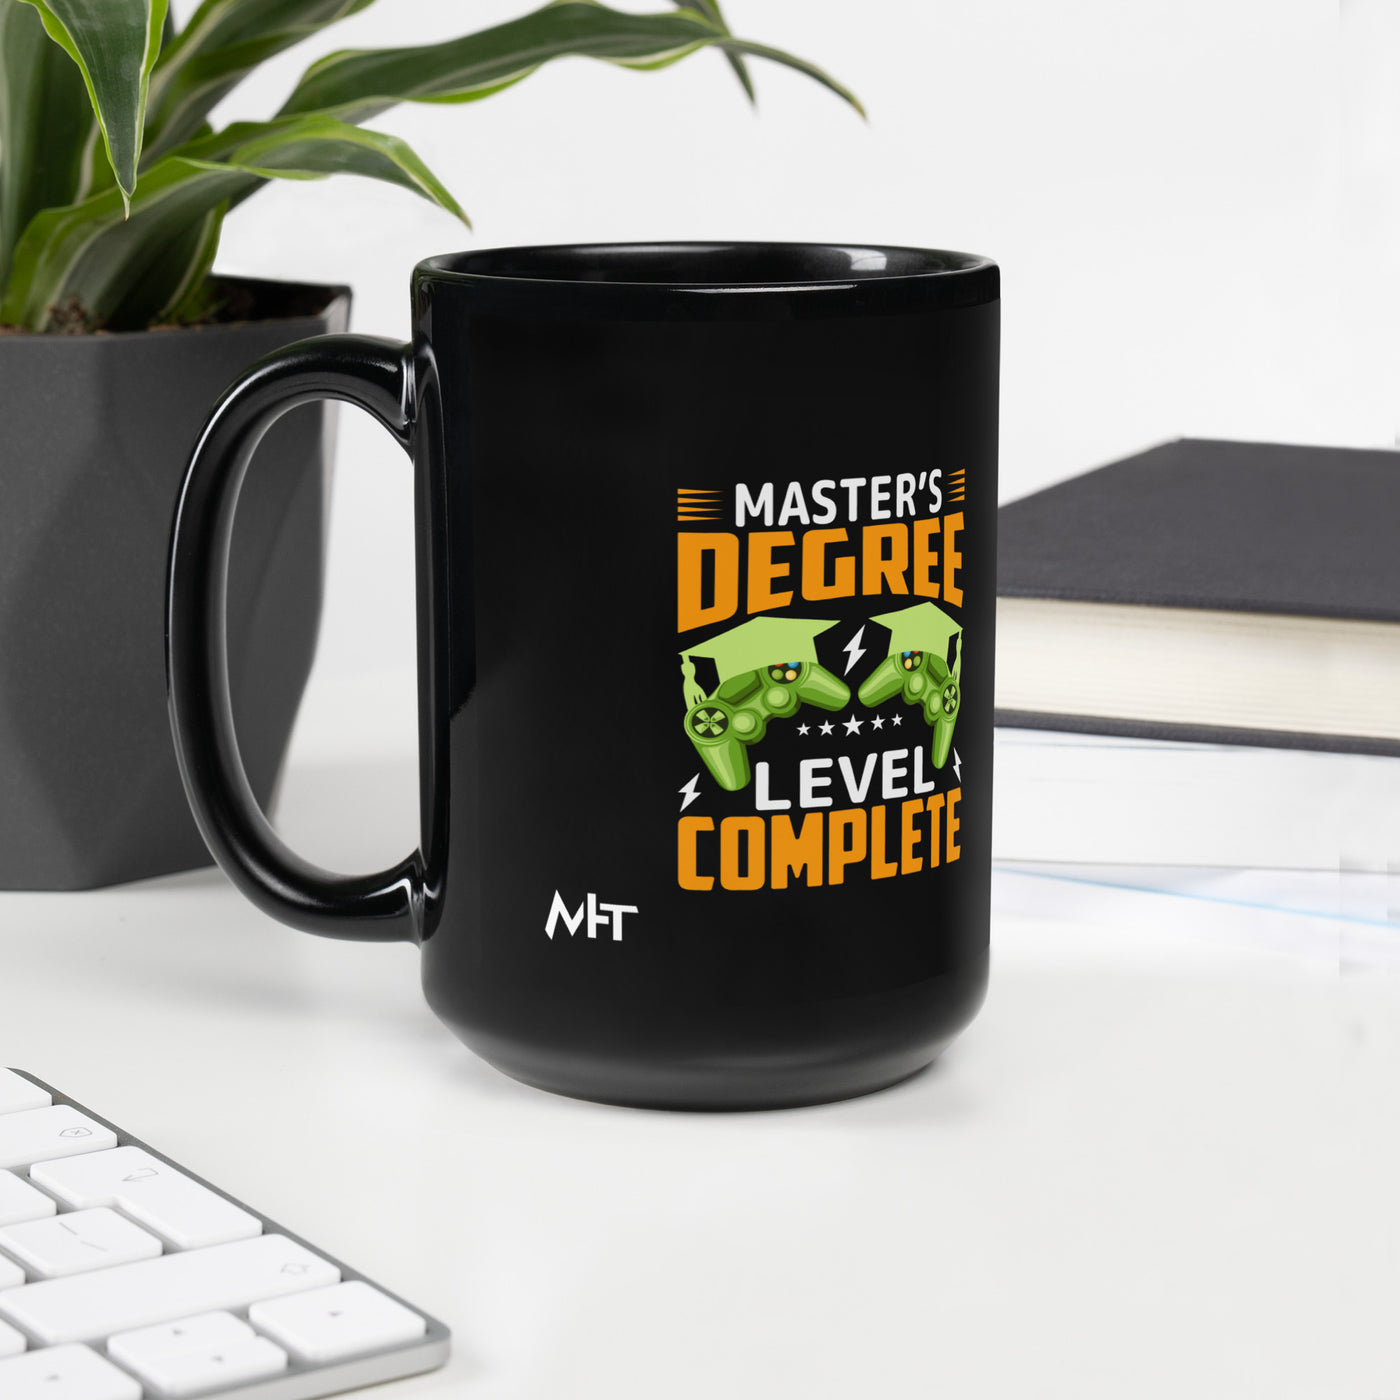 Master's Degree Level Complete - Black Glossy Mug